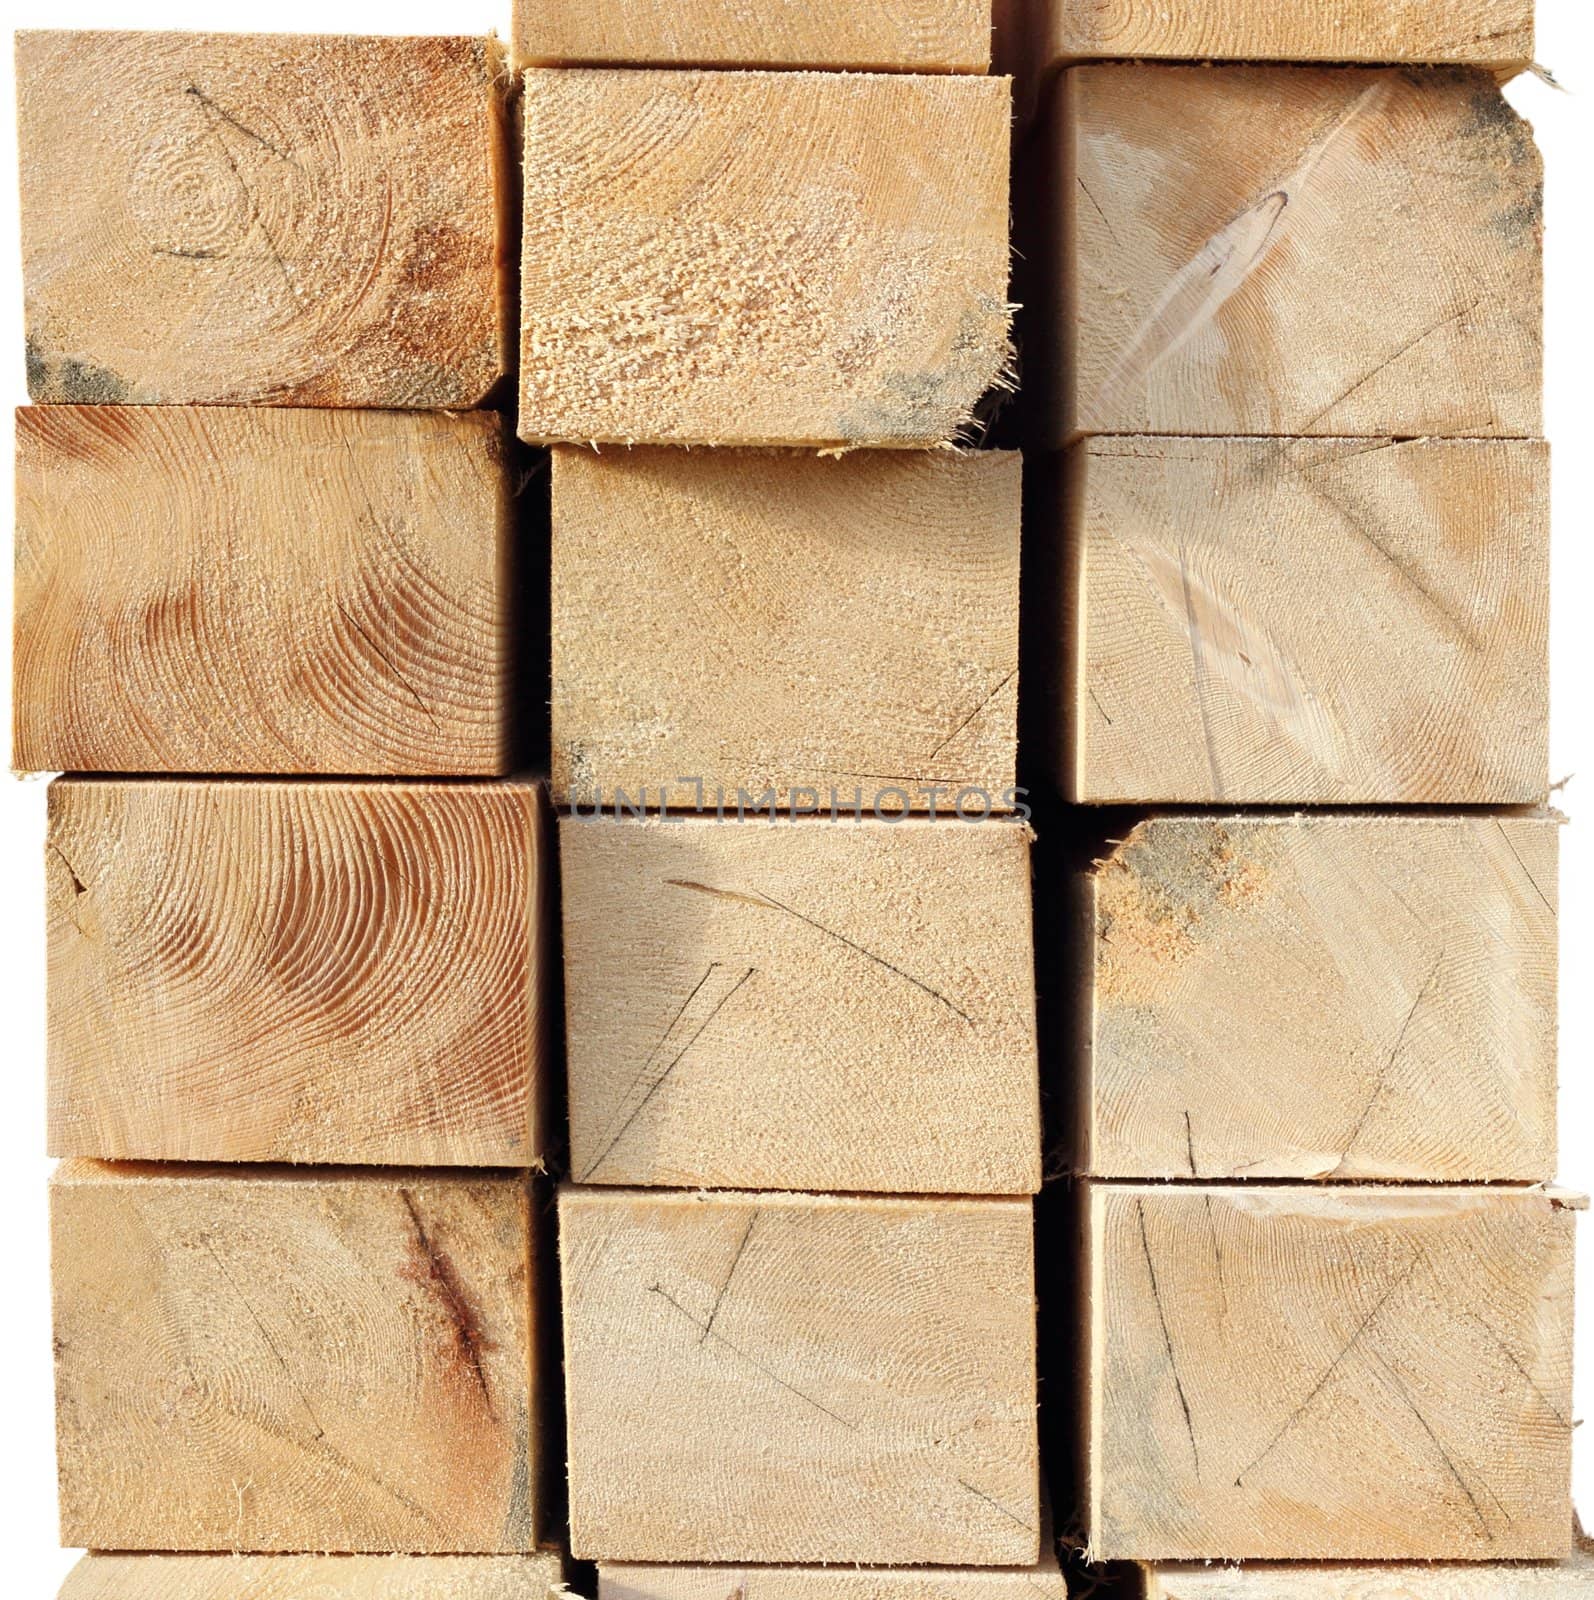 arrangement of wooden beams - felled spruce wood texture